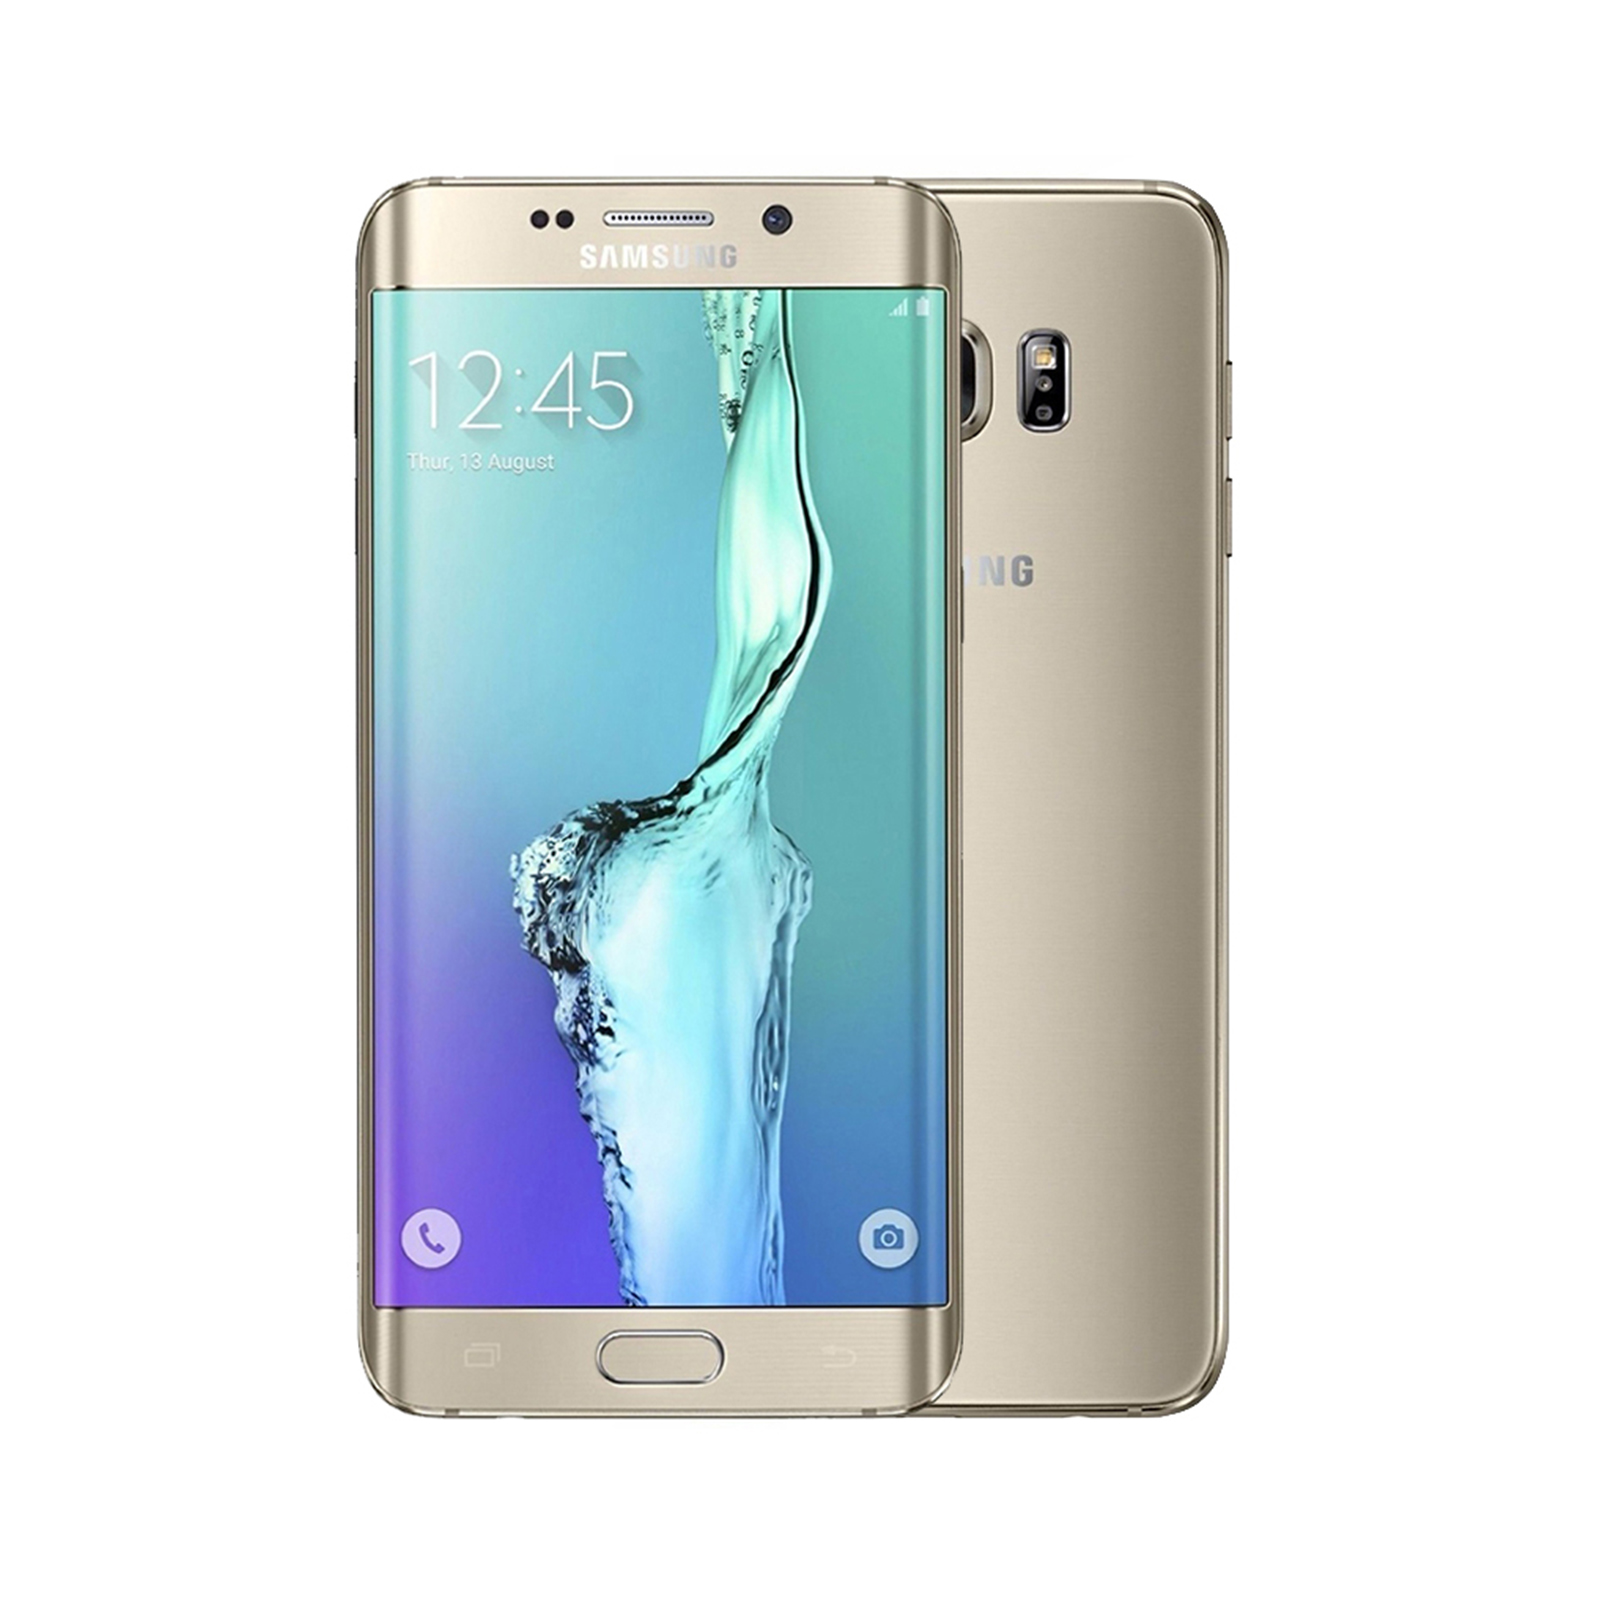 Samsung Galaxy S6 edge [64GB] [Gold] [Very Good]